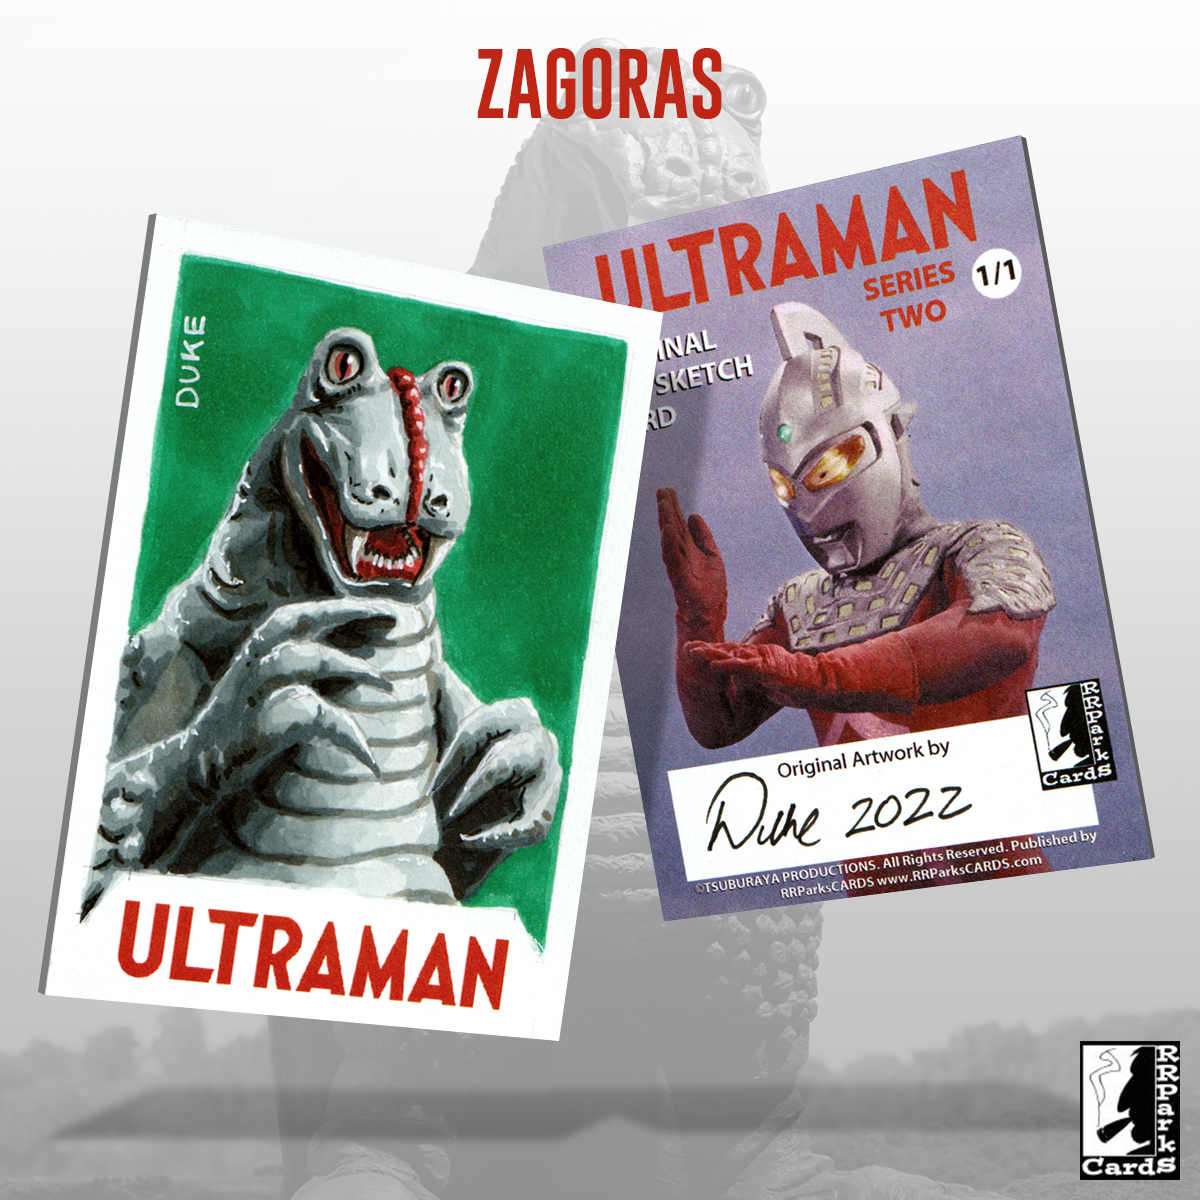 Ultraman Series 2 Zagoras Sketch Card by Duke